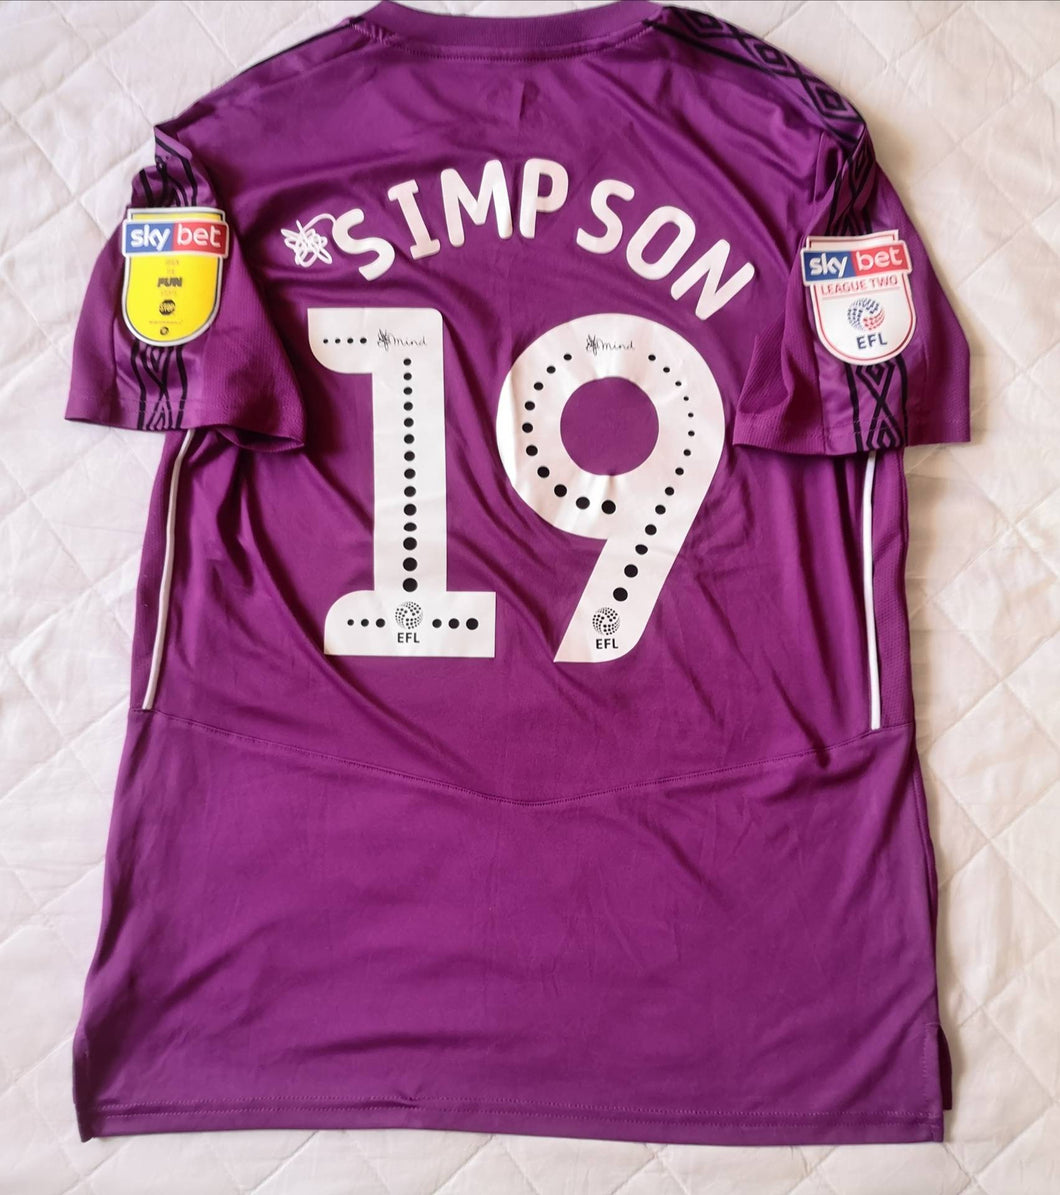 Authentic jersey Connor Simpson Carlisle United 2019 Player Issue Umbro